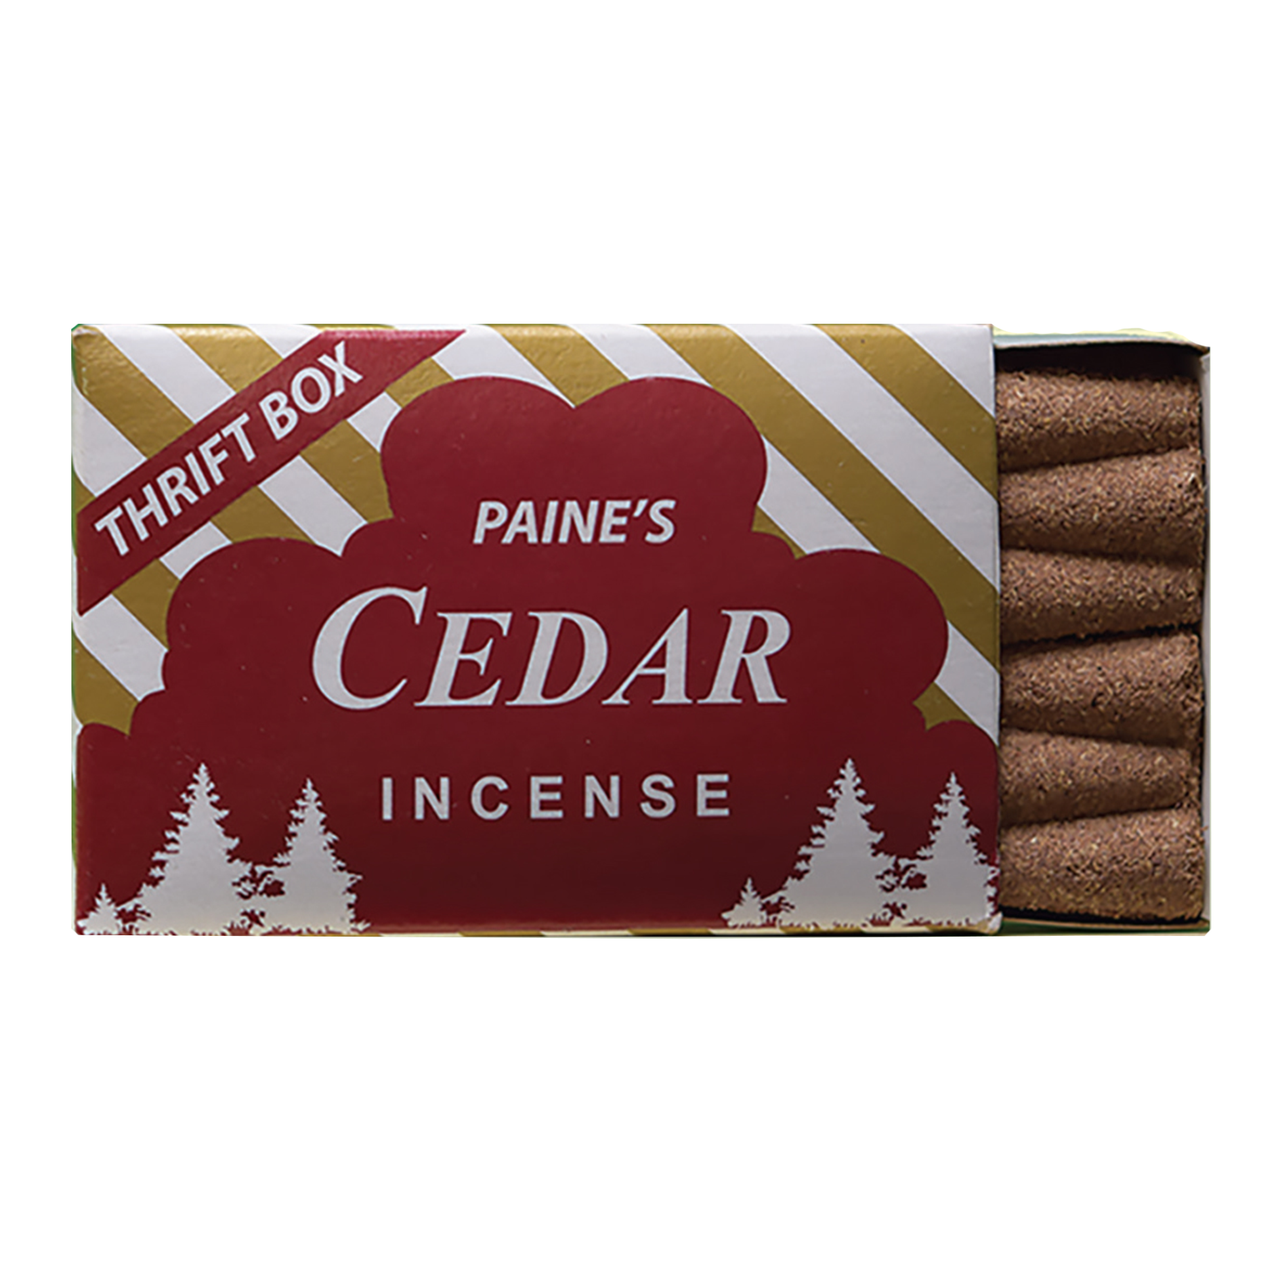 Paine's Cedar Incense Thrift Box